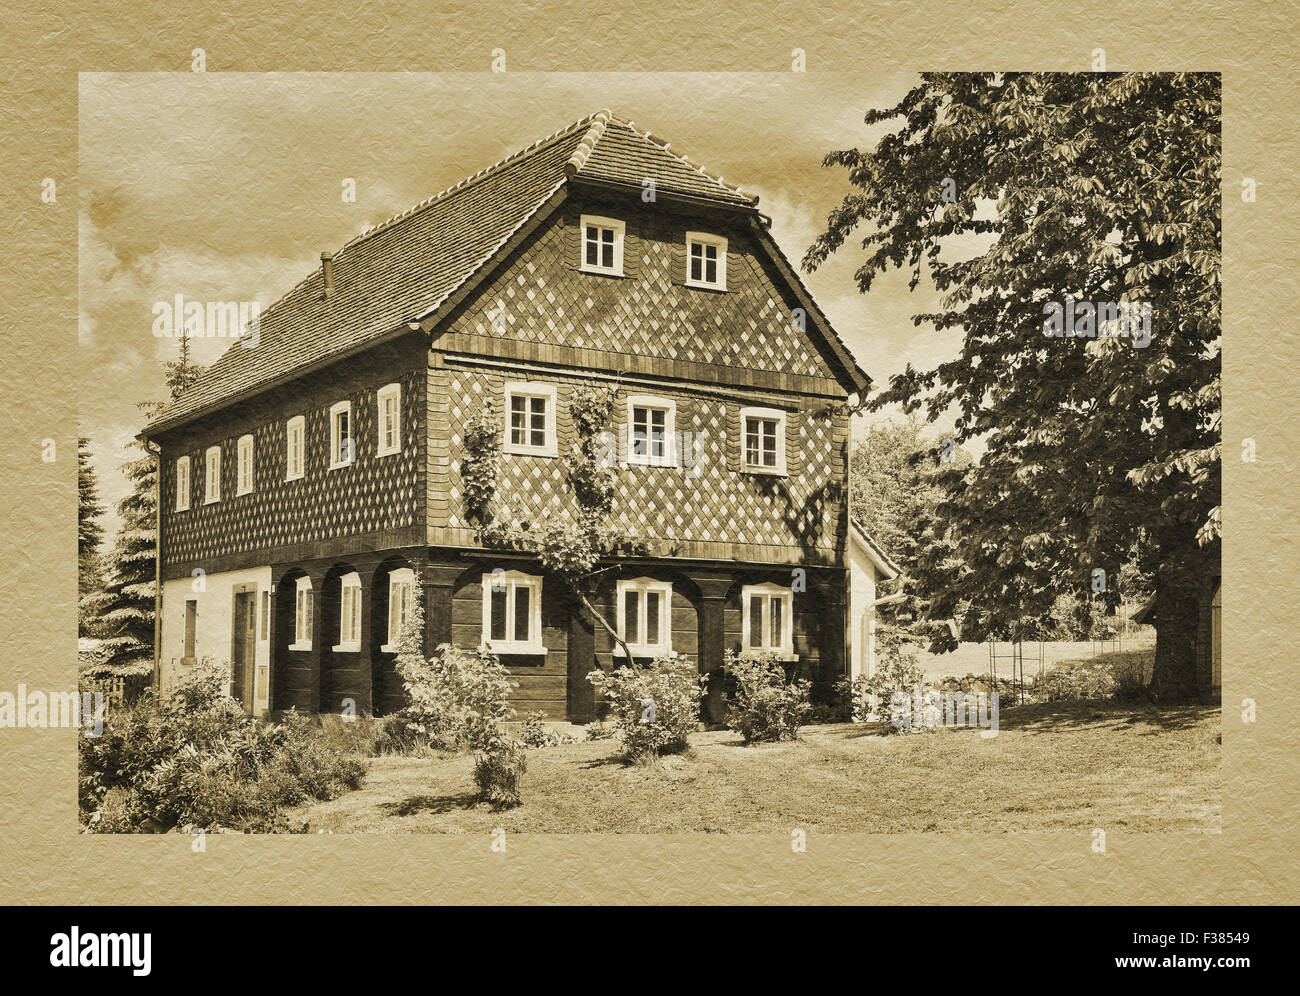 Typical Umgebindehaus-Building in Upper Lusatia, Obercunnersdorf, administrative district Goerlitz, Saxony, Germany, Europe Stock Photo